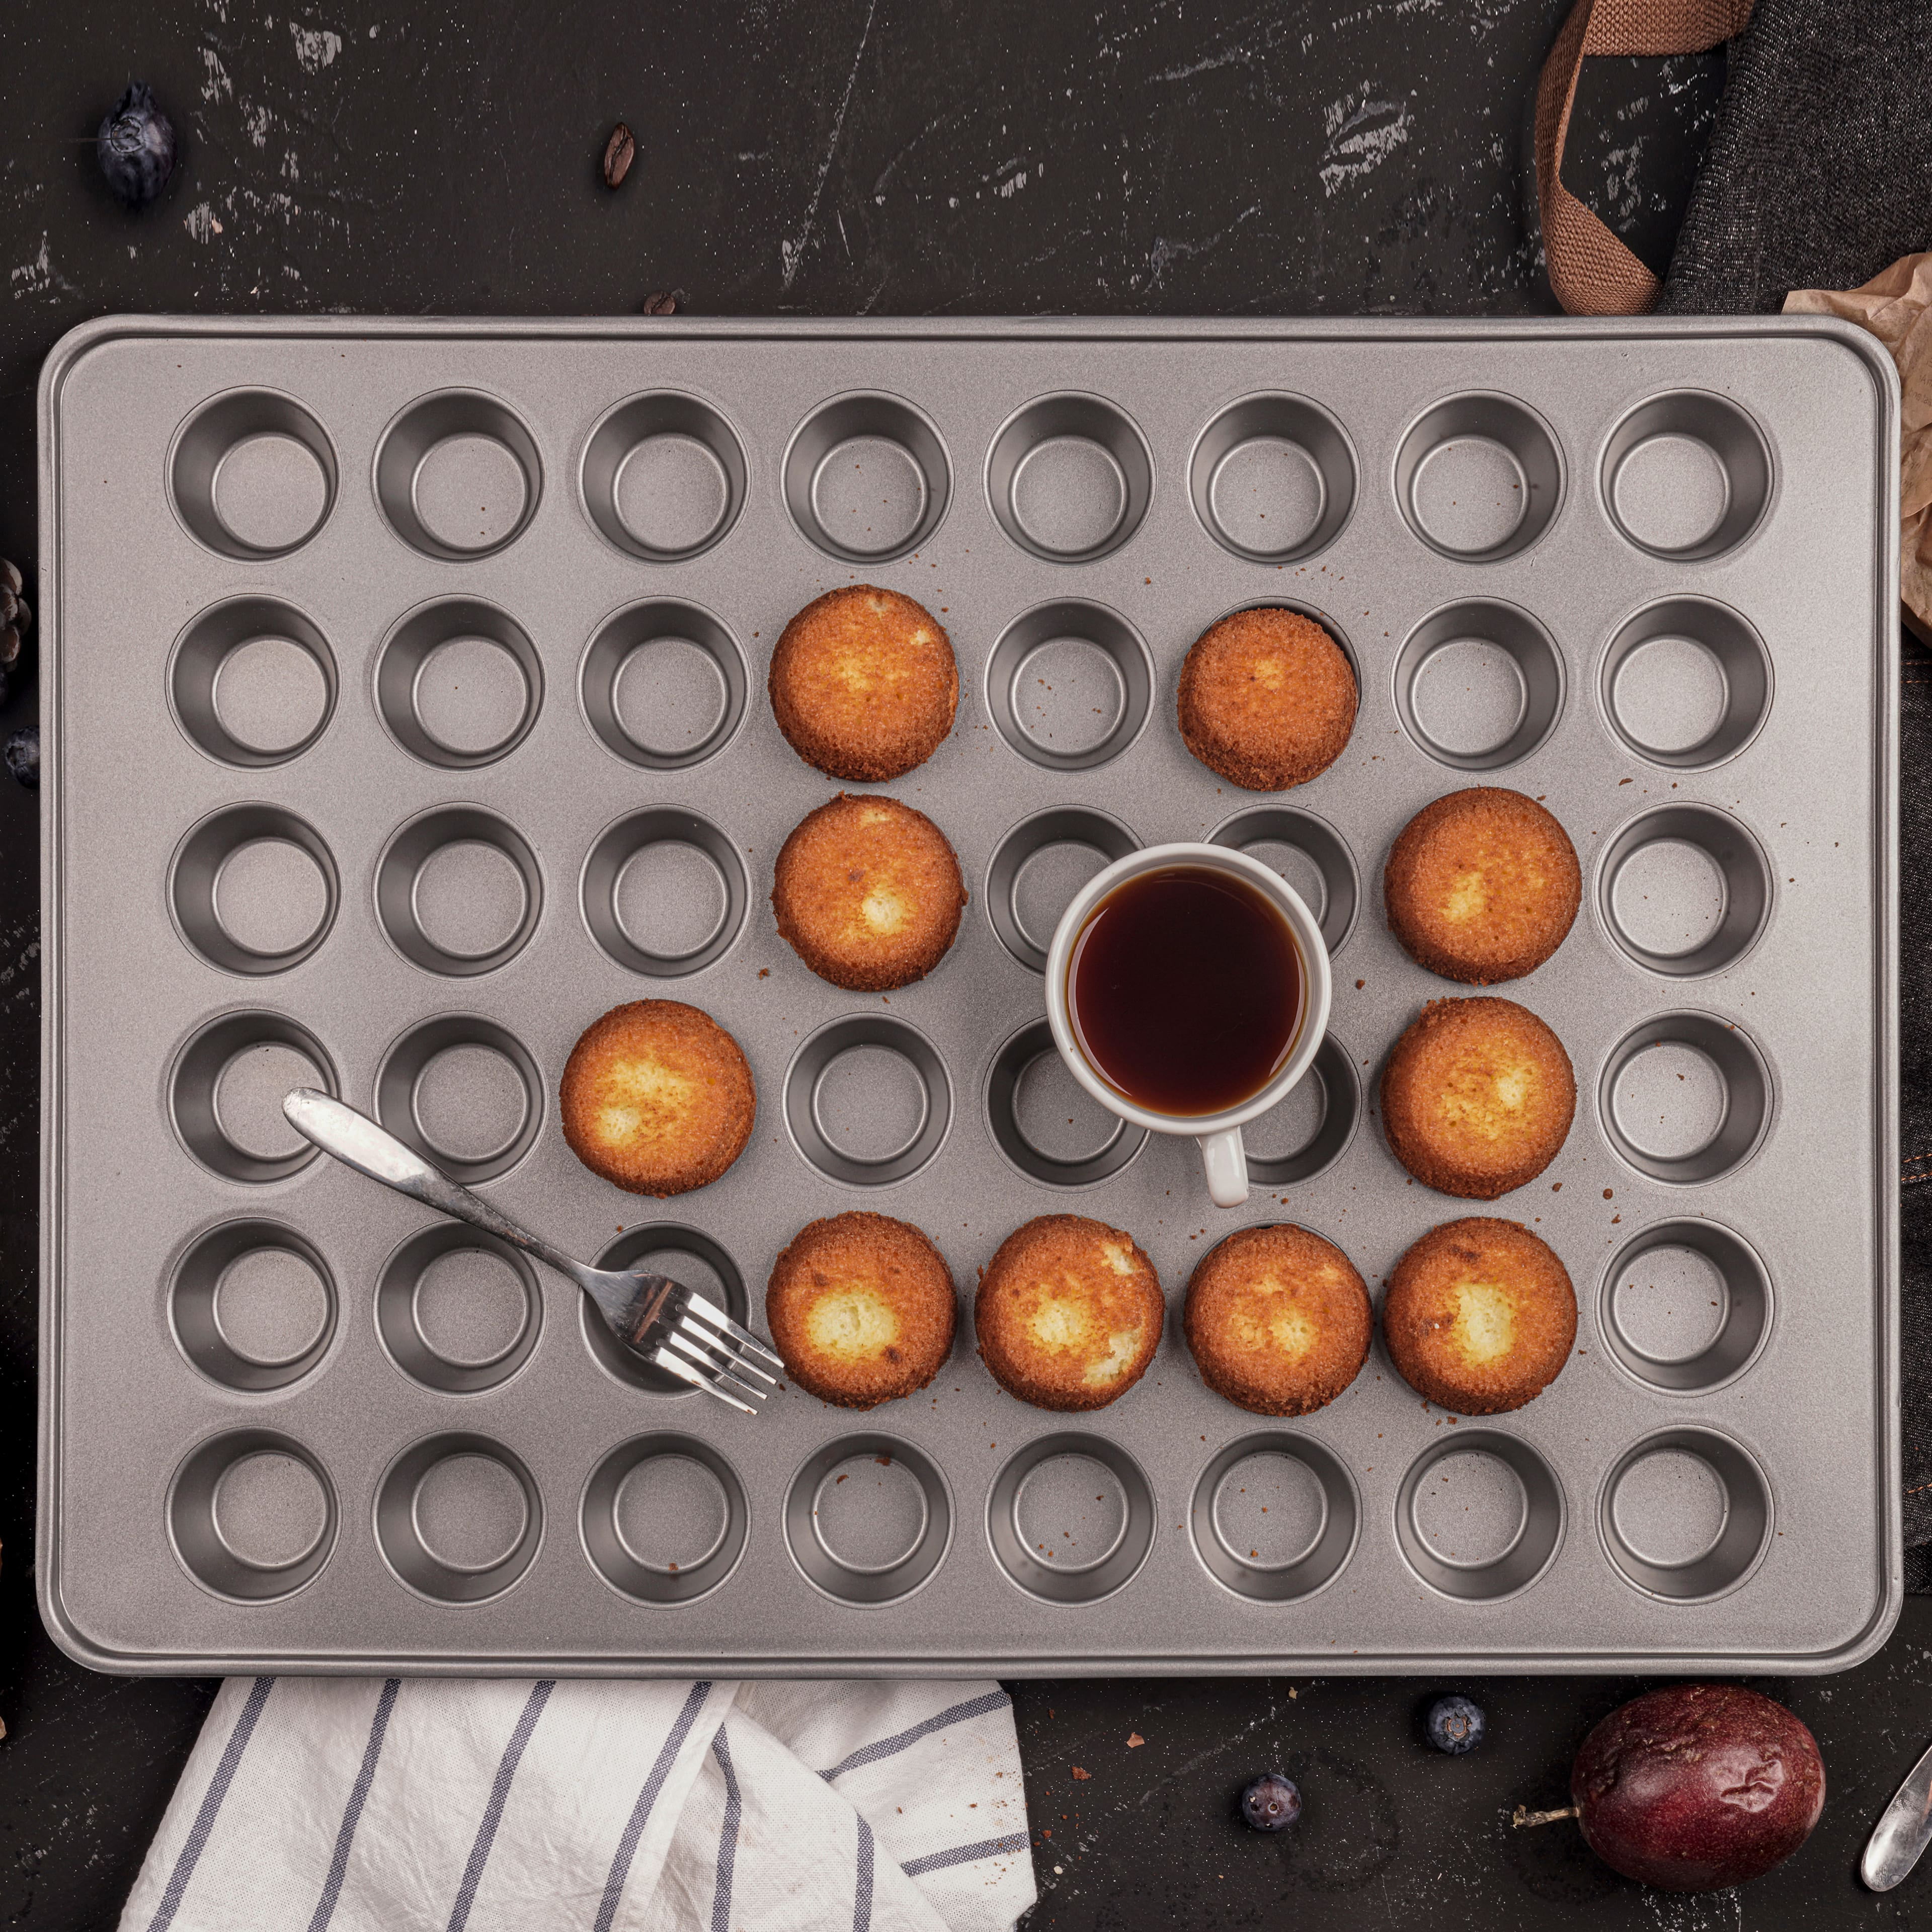 STÄDTER We love baking - 48 cups Mini muffin pan